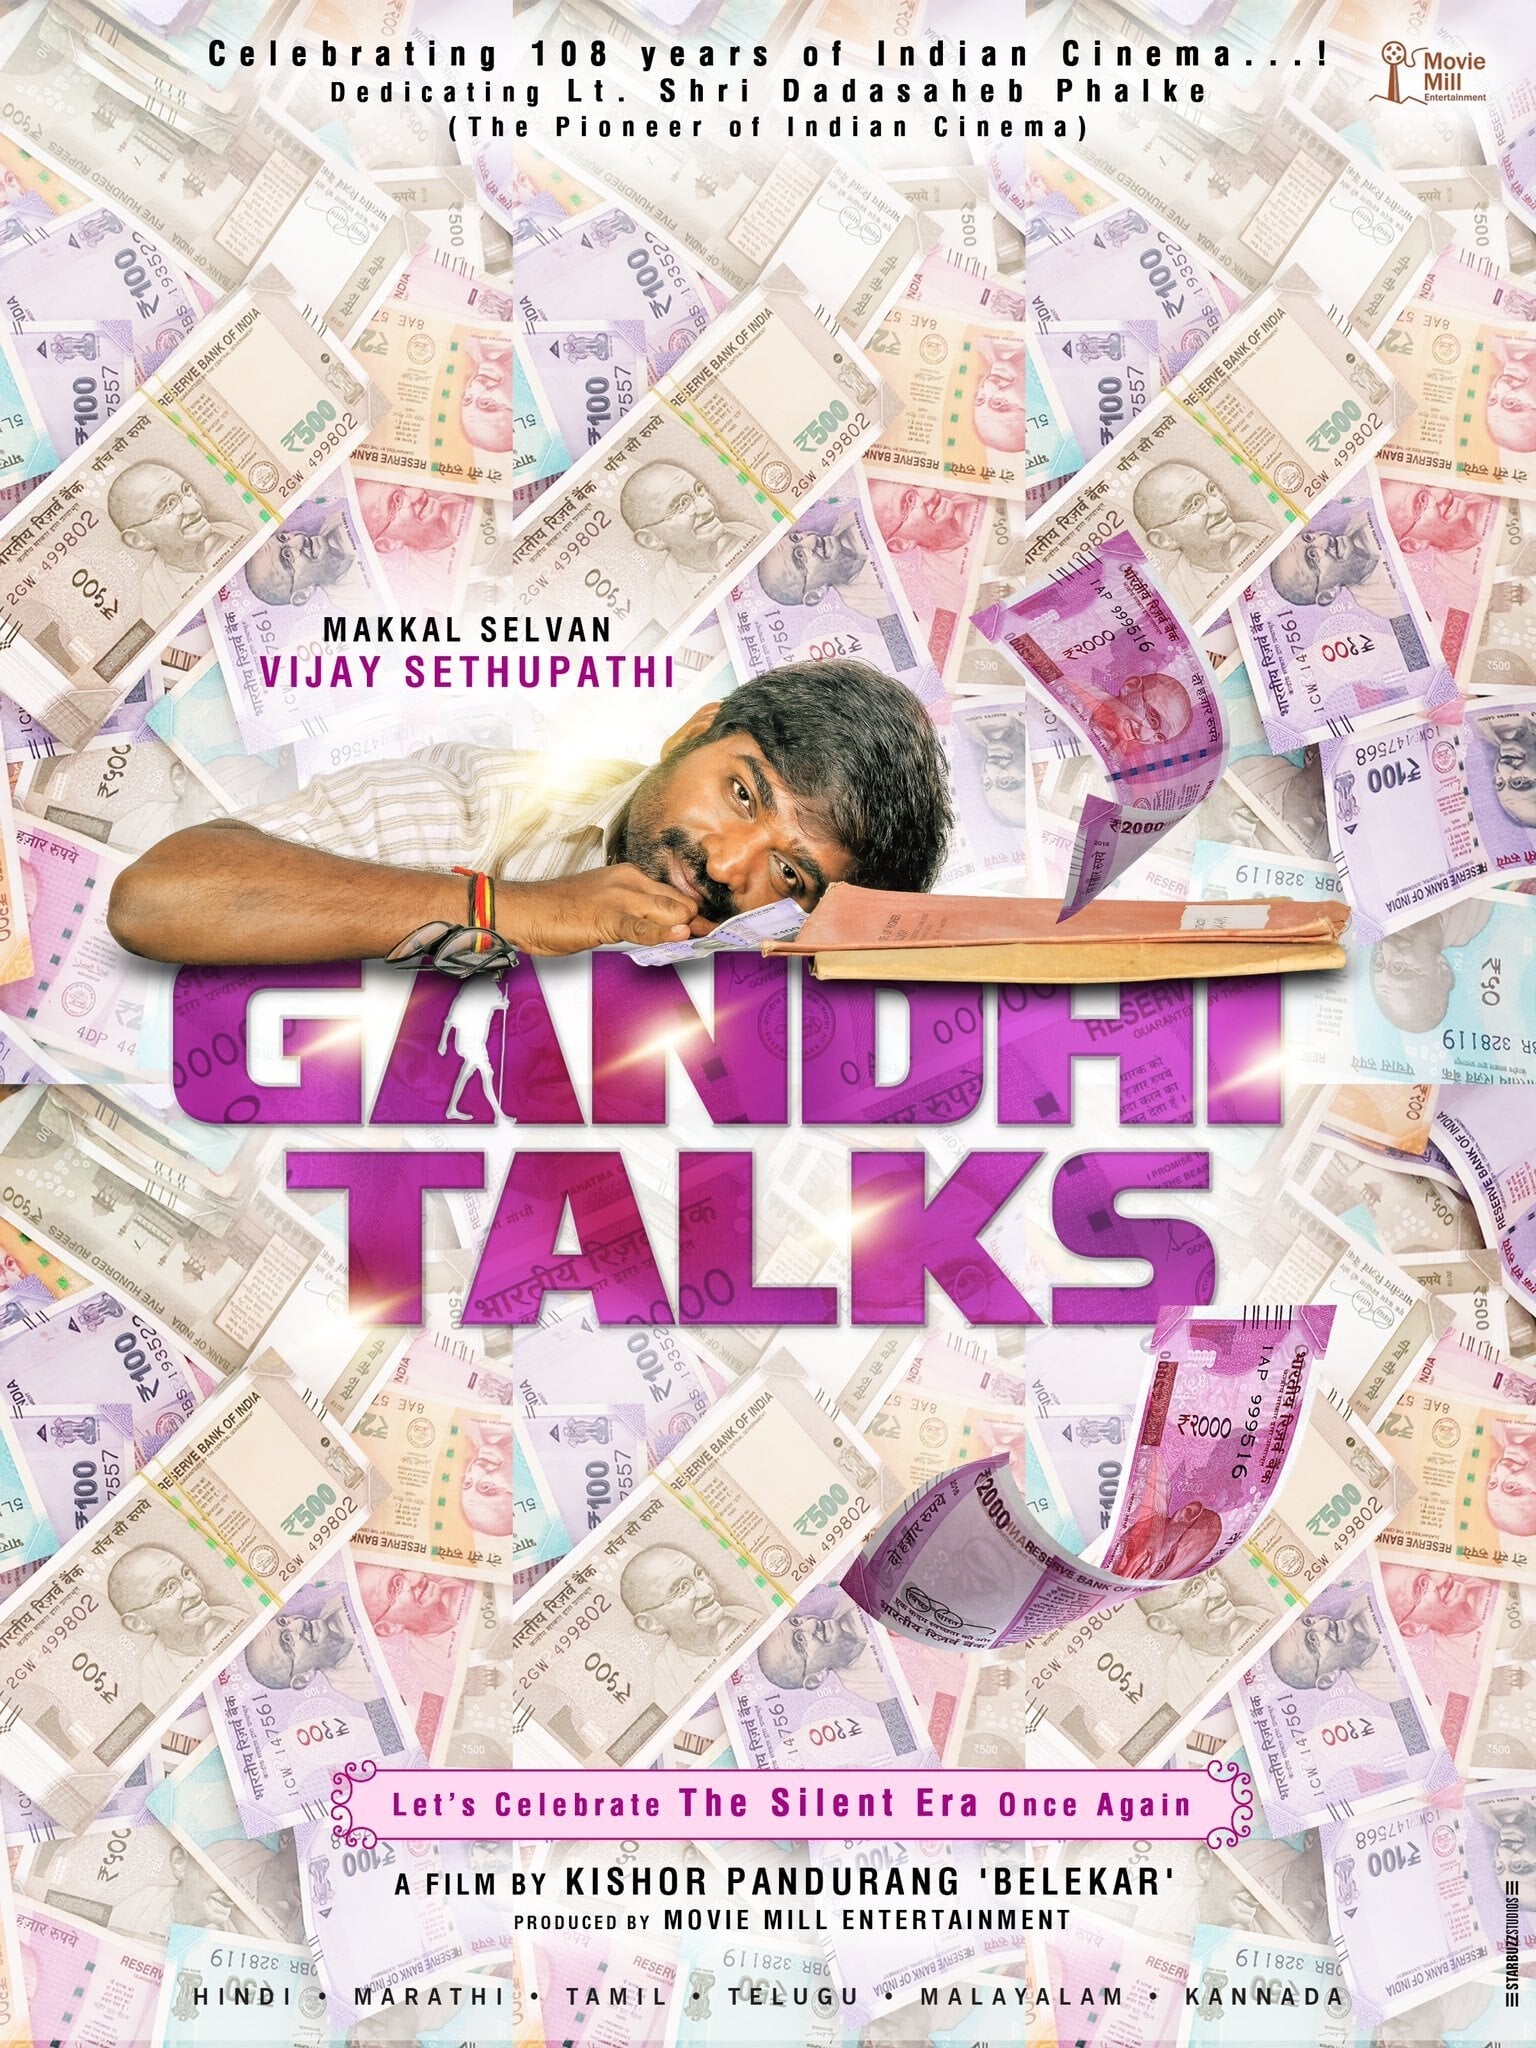 Poster for the movie "Gandhi Talks"